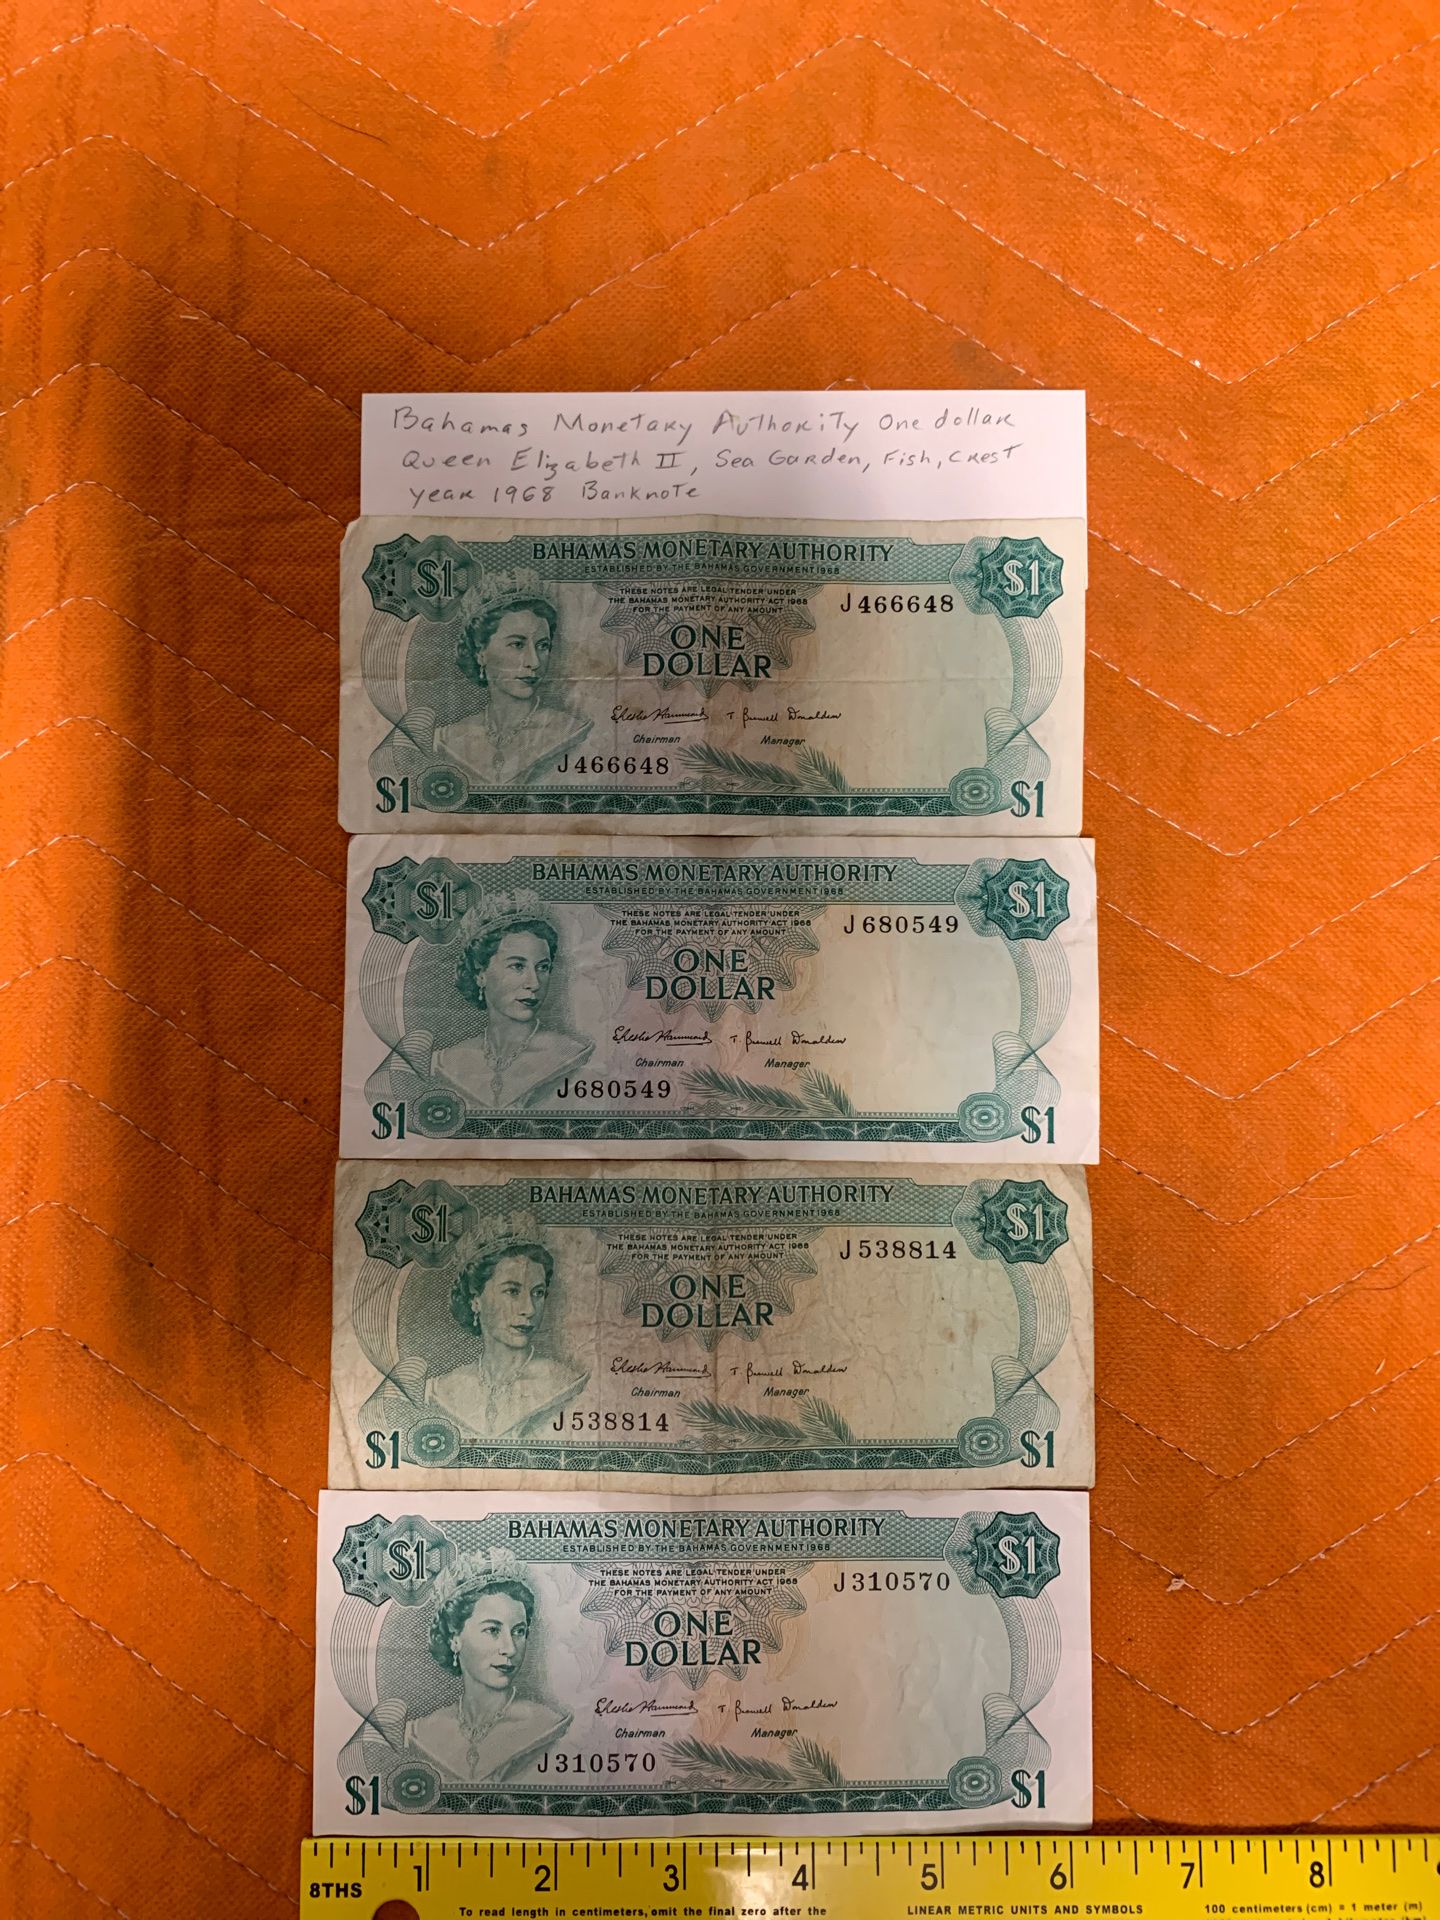 Bahamas monetary authority one dollar